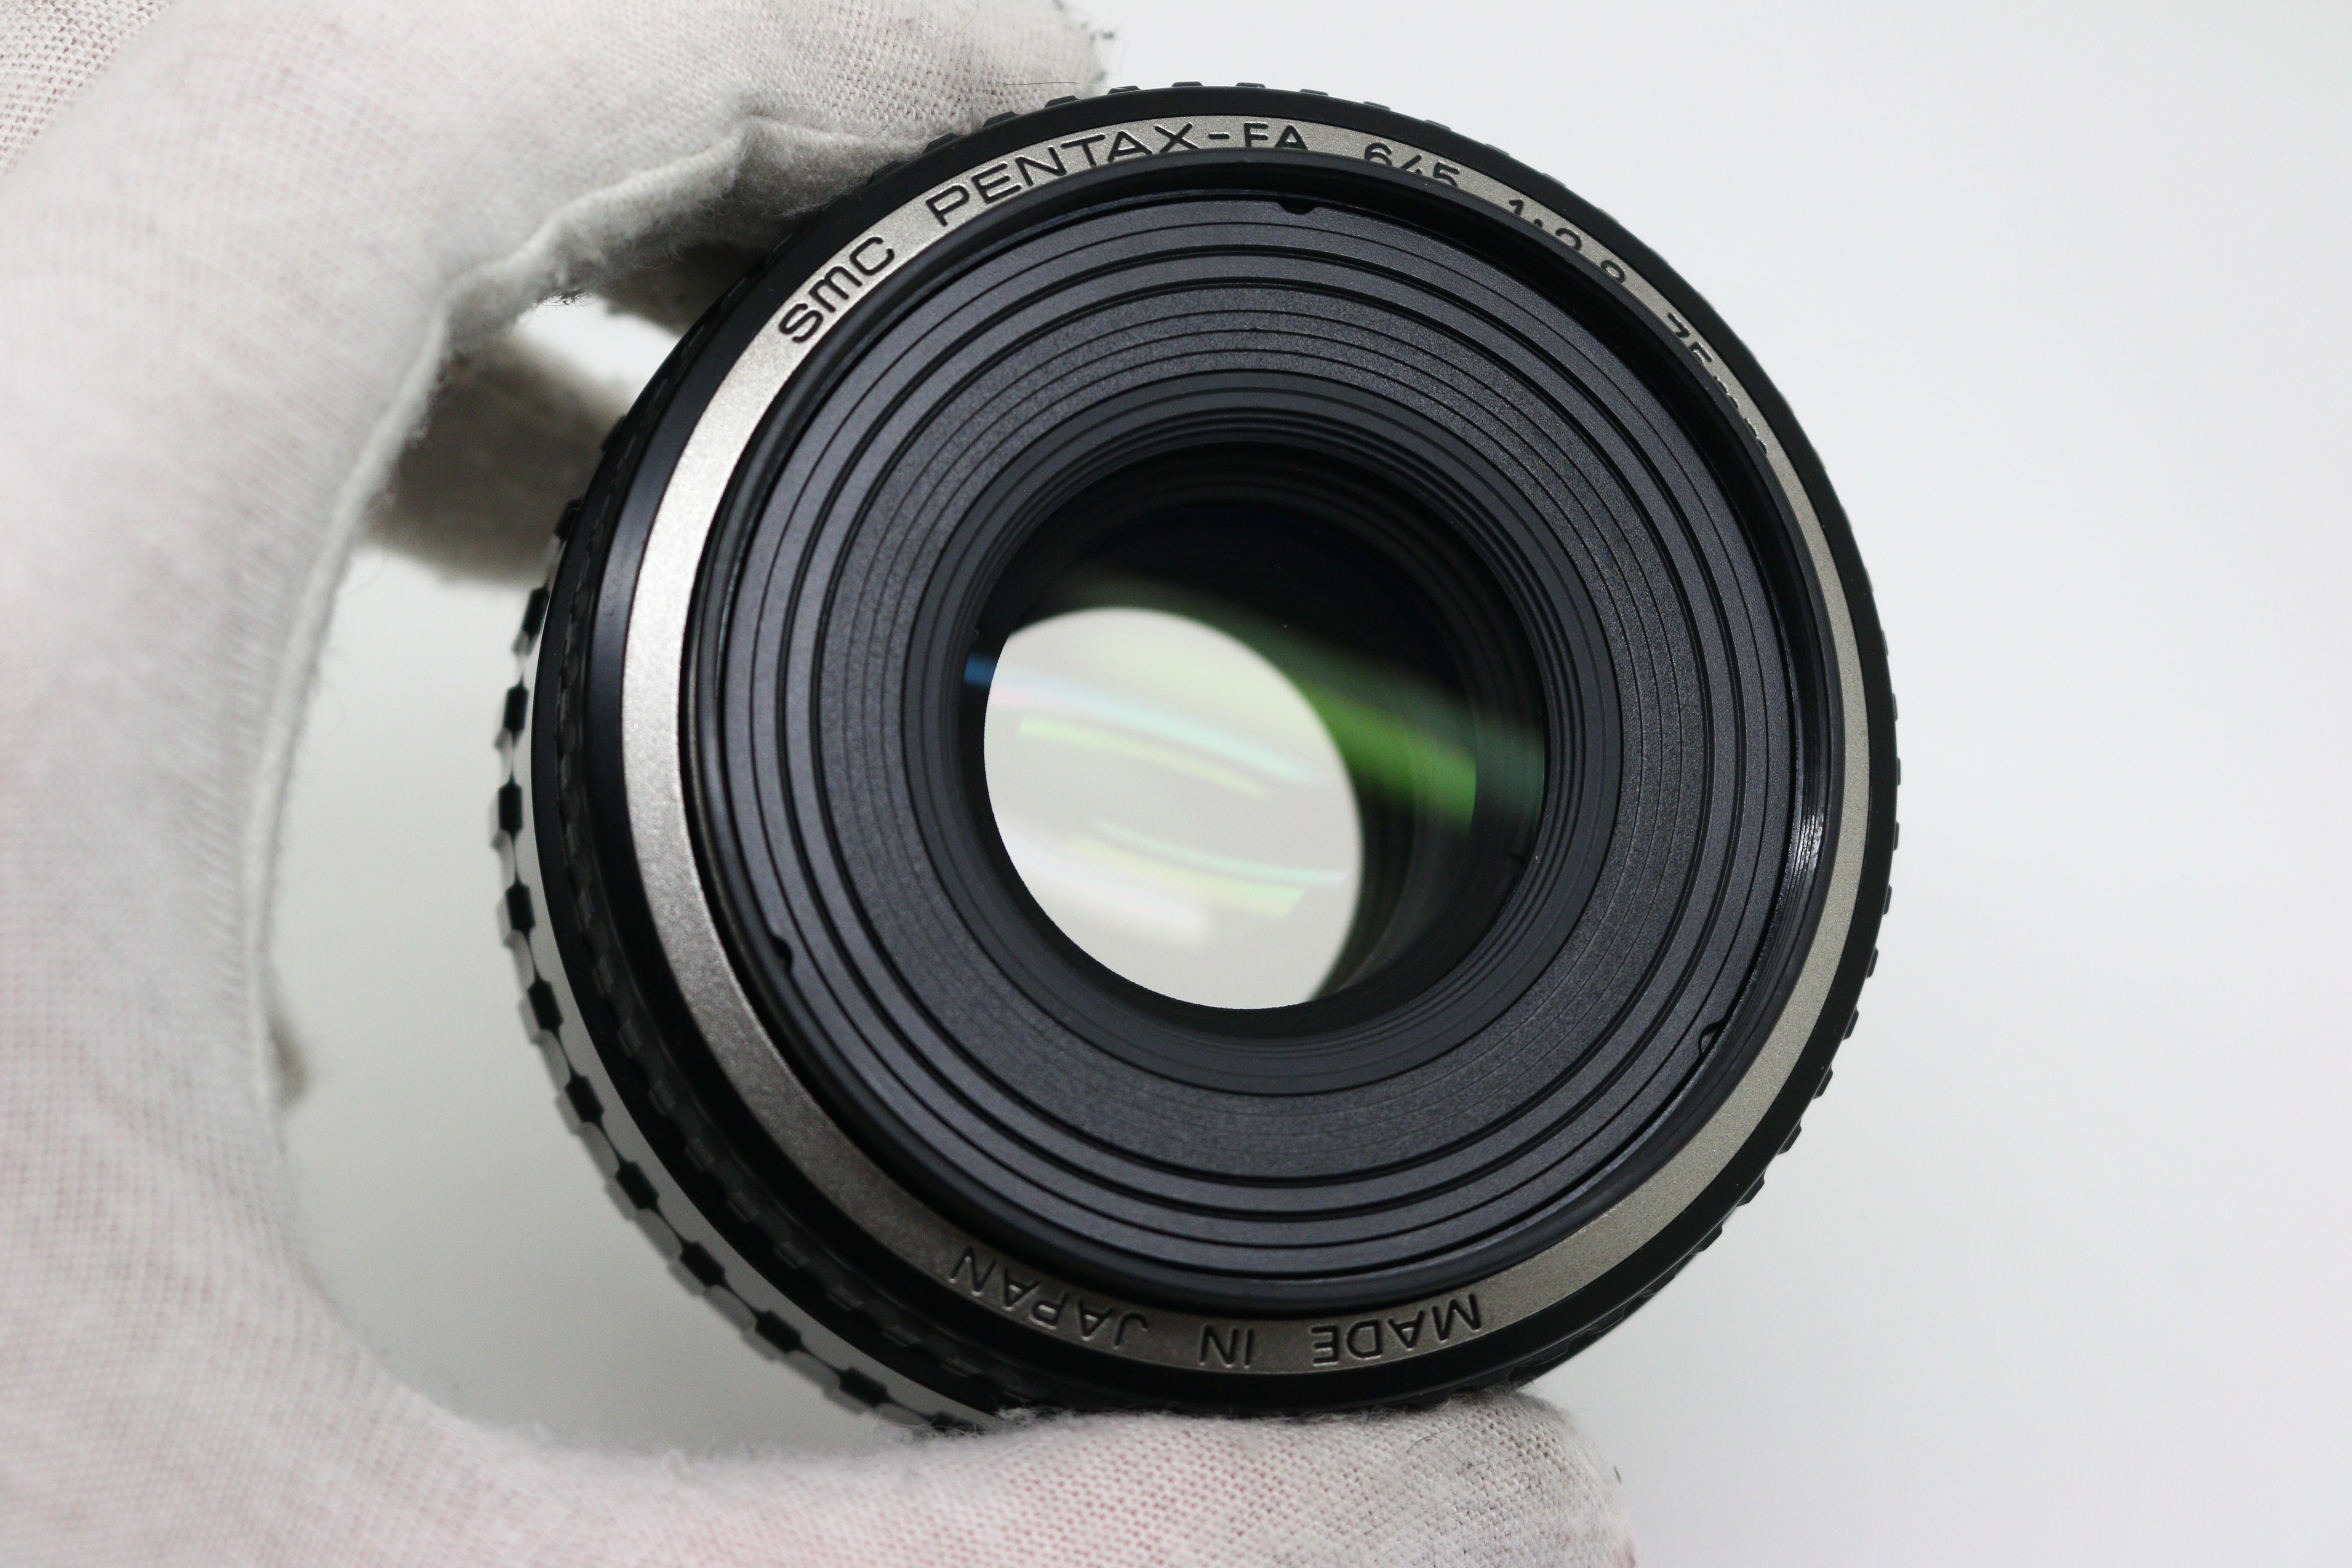 Pentax 645N w/ SMC 75mm F/2.8 FA Lens w/ Pentax Strap